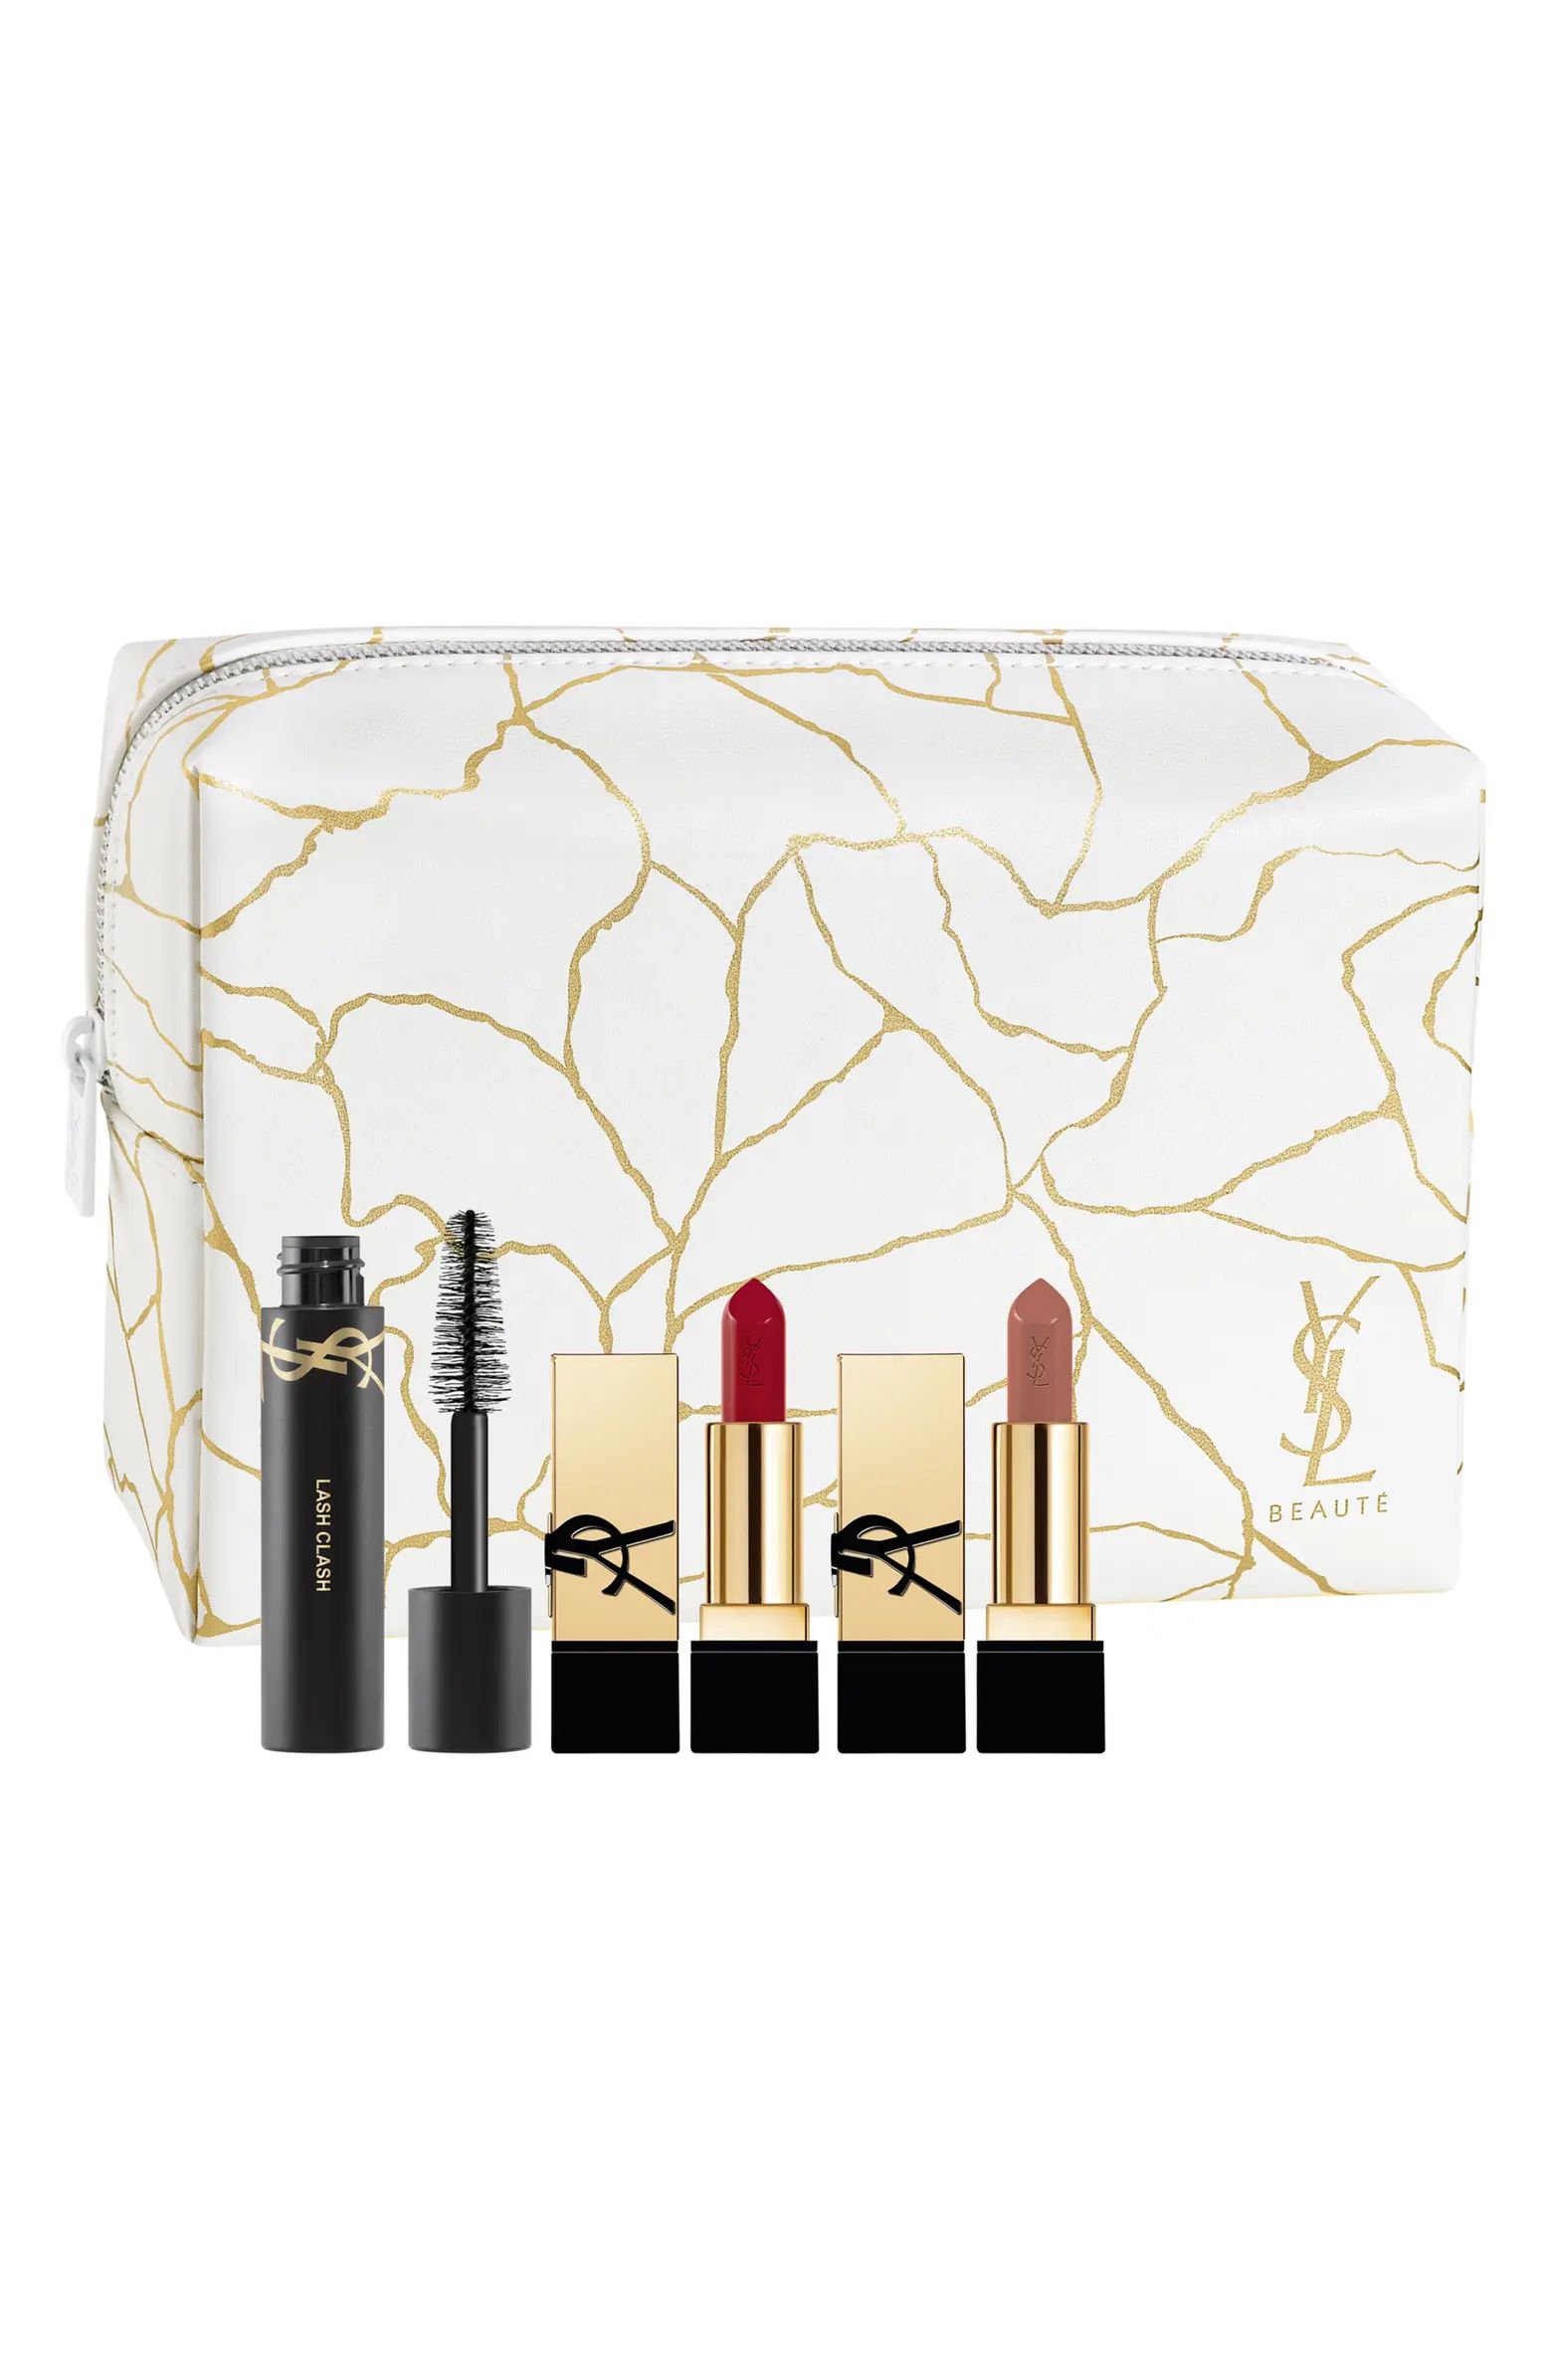 Mini Lash Clash & Rouge Pur Couture Satin Lipstick Set $50 Value | Nordstrom